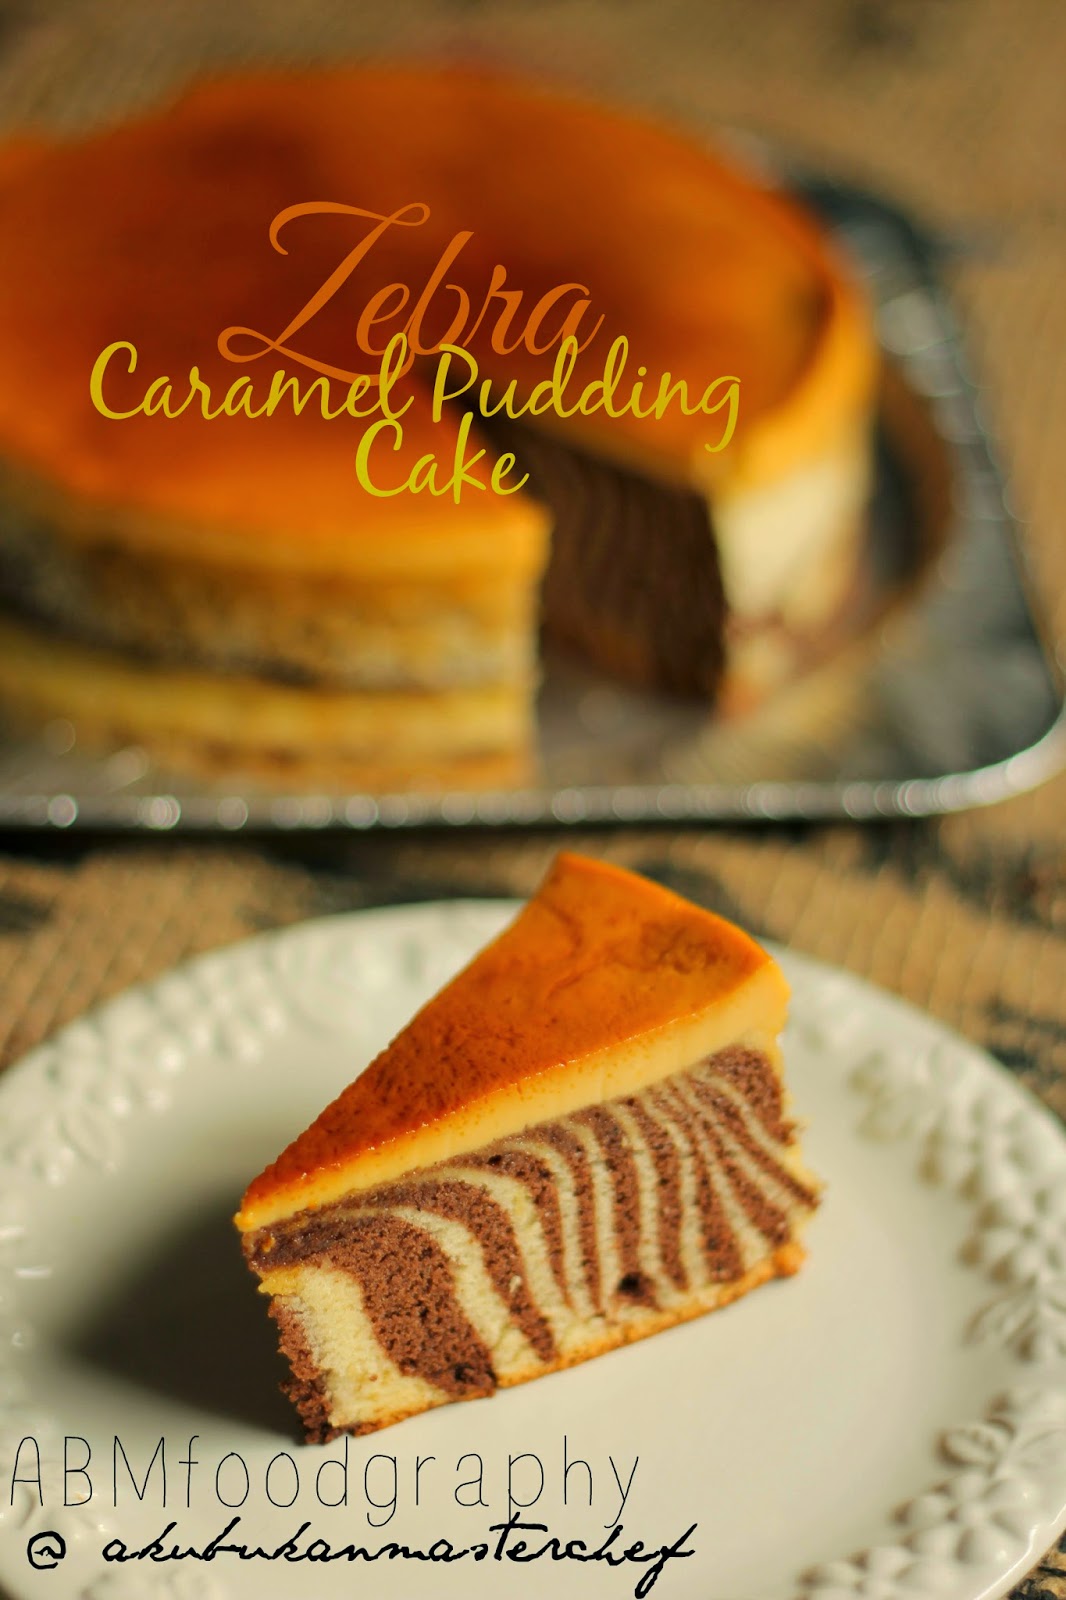 Aku Bukan Masterchef: Resepi 301 : Zebra Caramel Pudding Cake